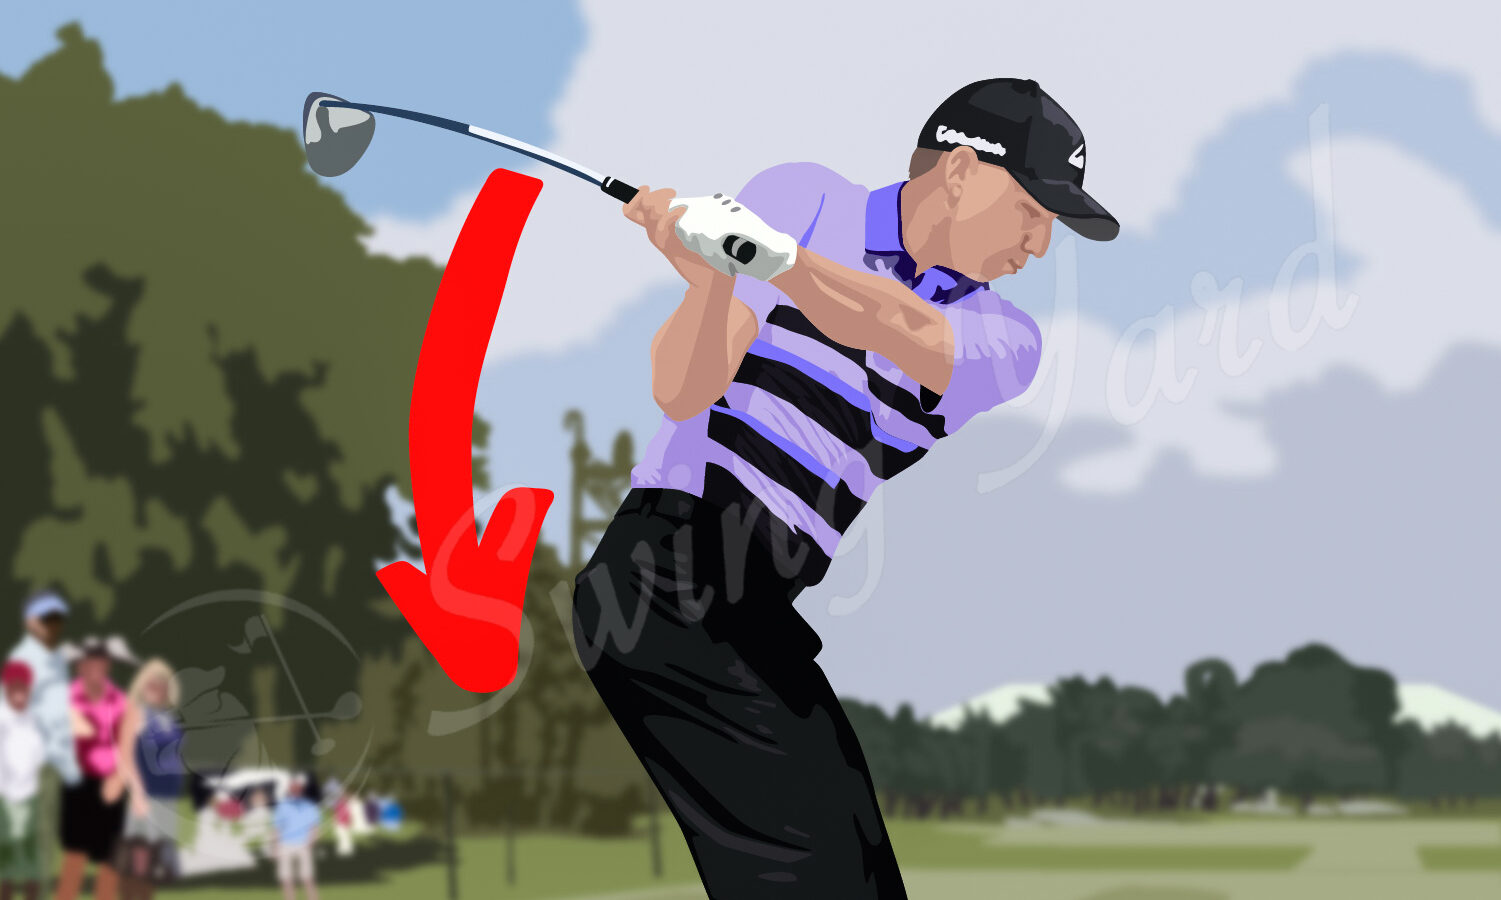 Golfer shallowing the club